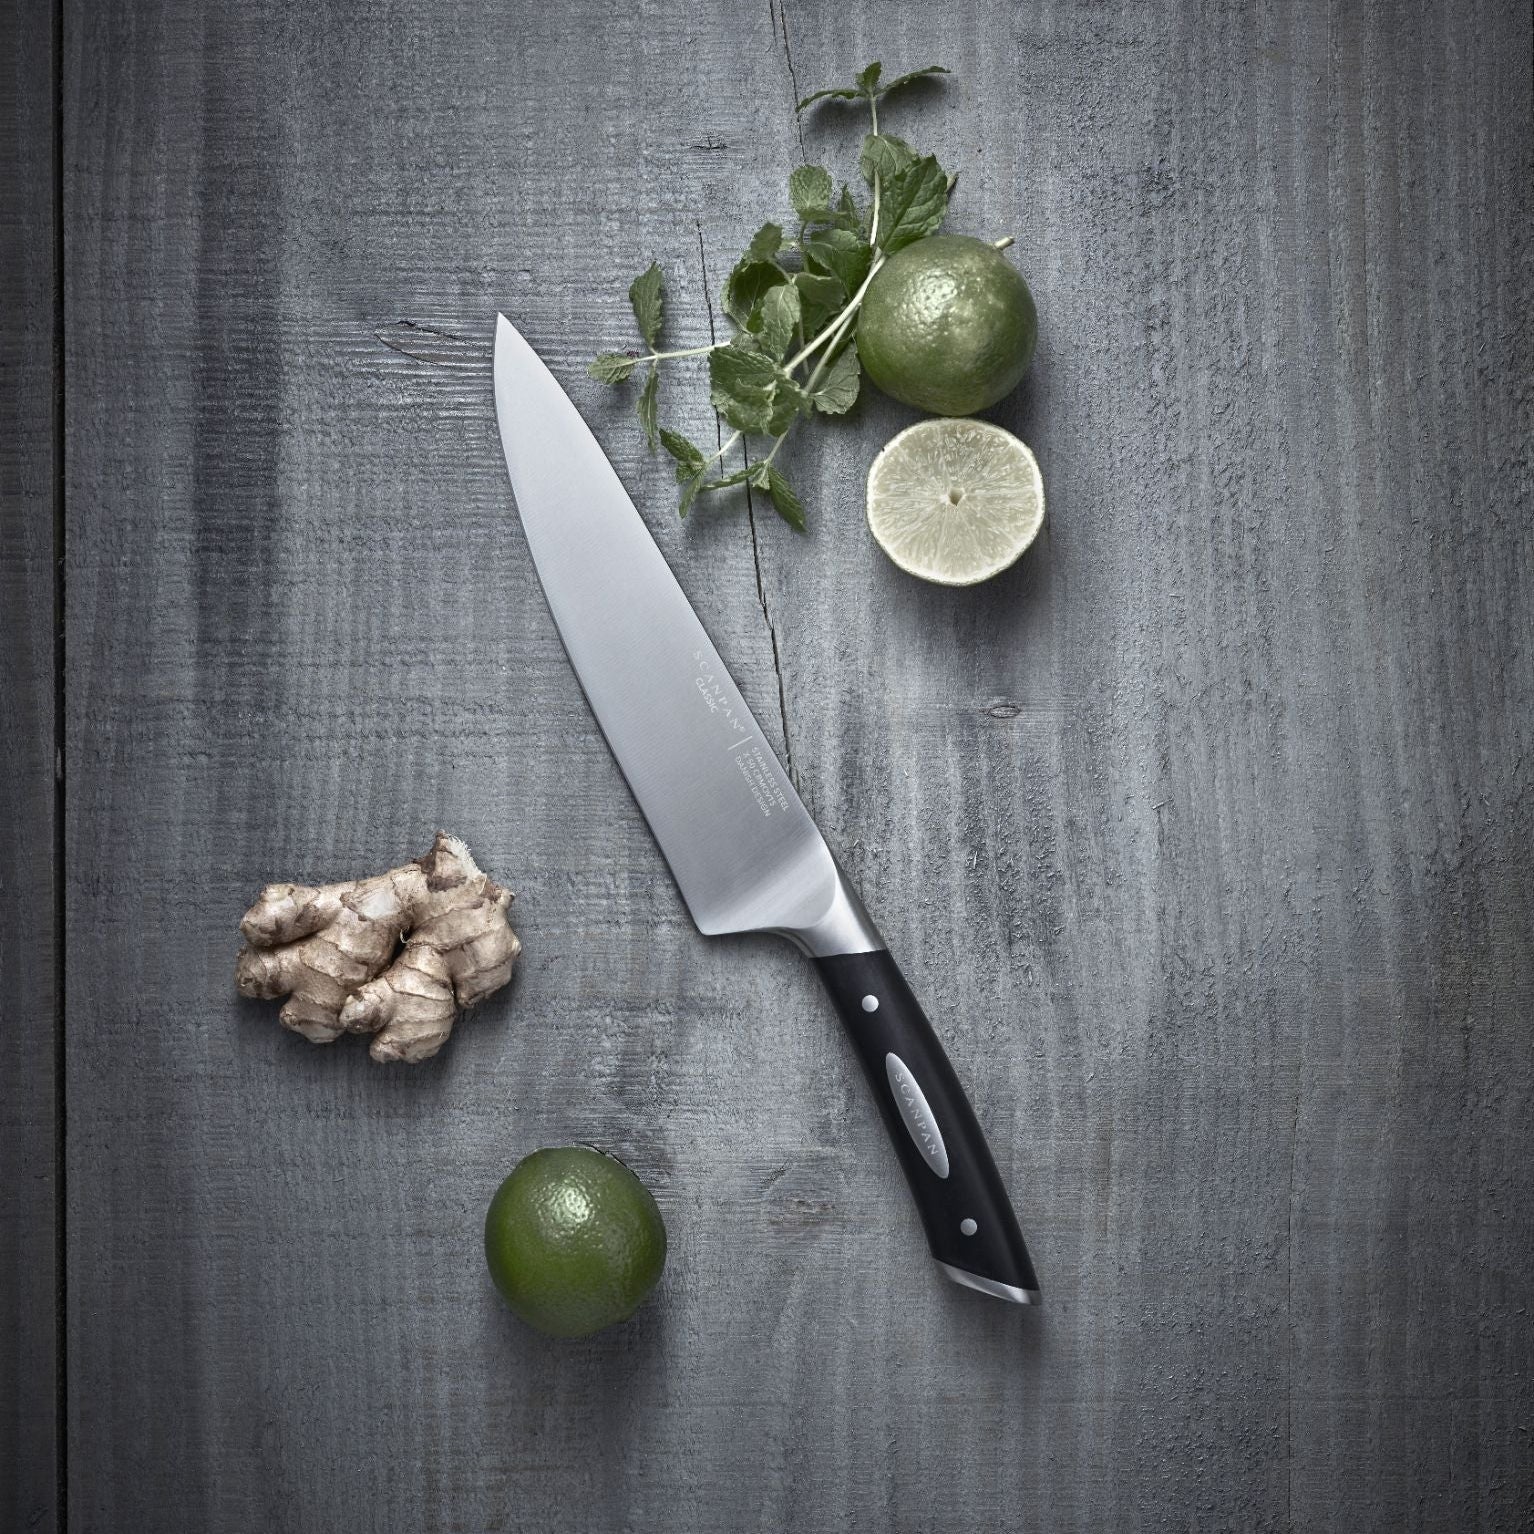 SCANPAN Classic Knives - Cooks Knife 15cm